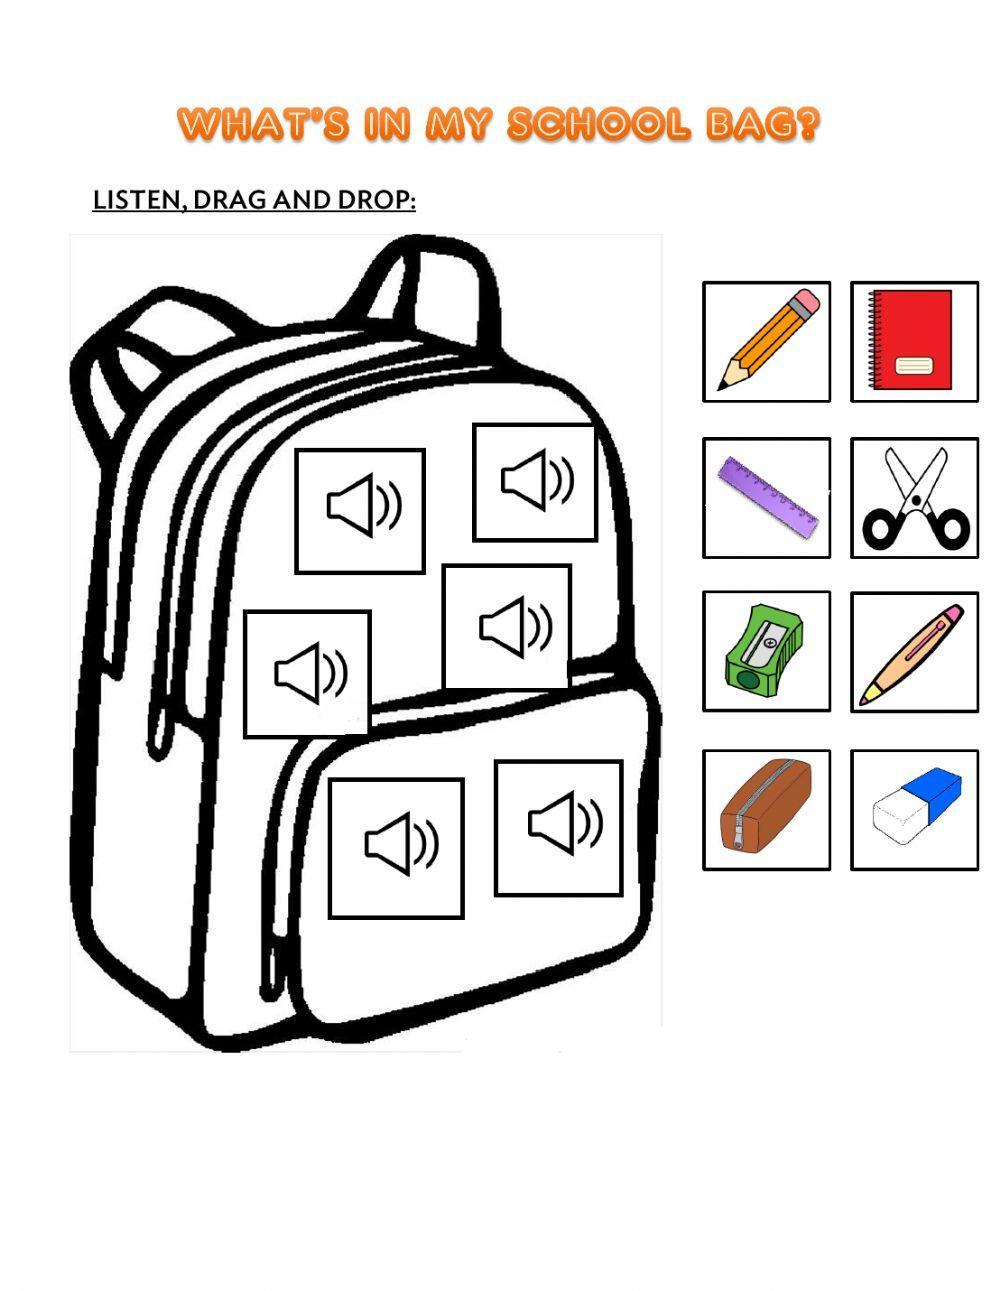 What's in my school bag?